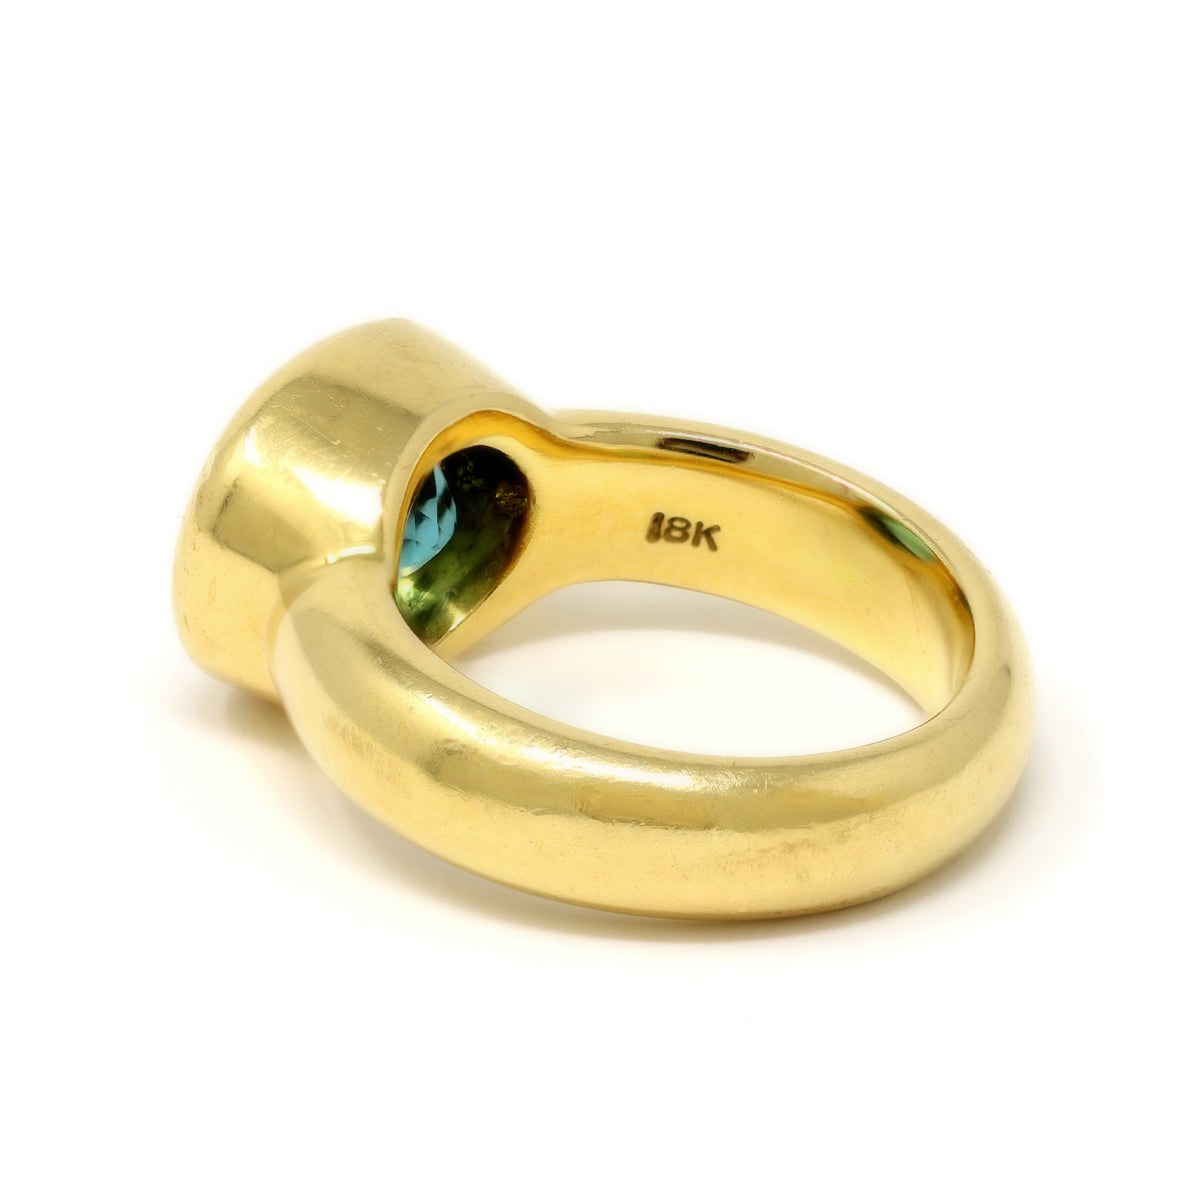 Oval-Cut Light Green Tourmaline Ring Set in 18k Yellow Gold hallmark view